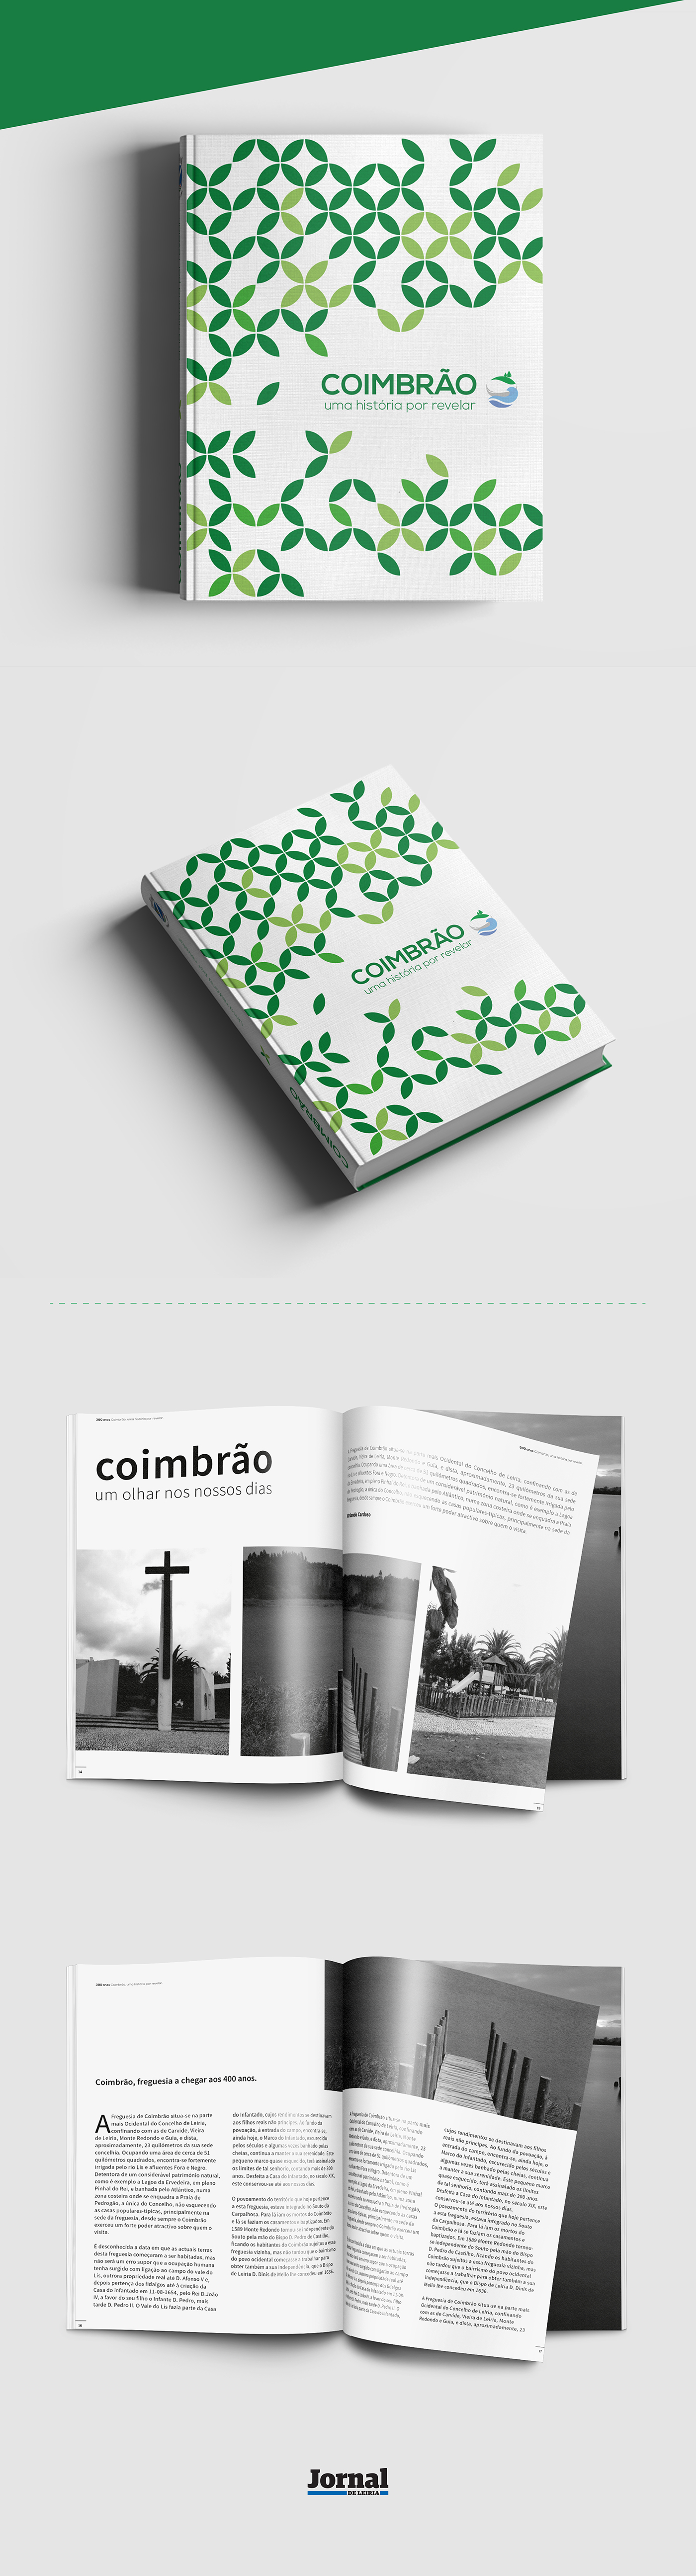 book editorial design green Coimbrão leiria Portugal photos graphic design  memories